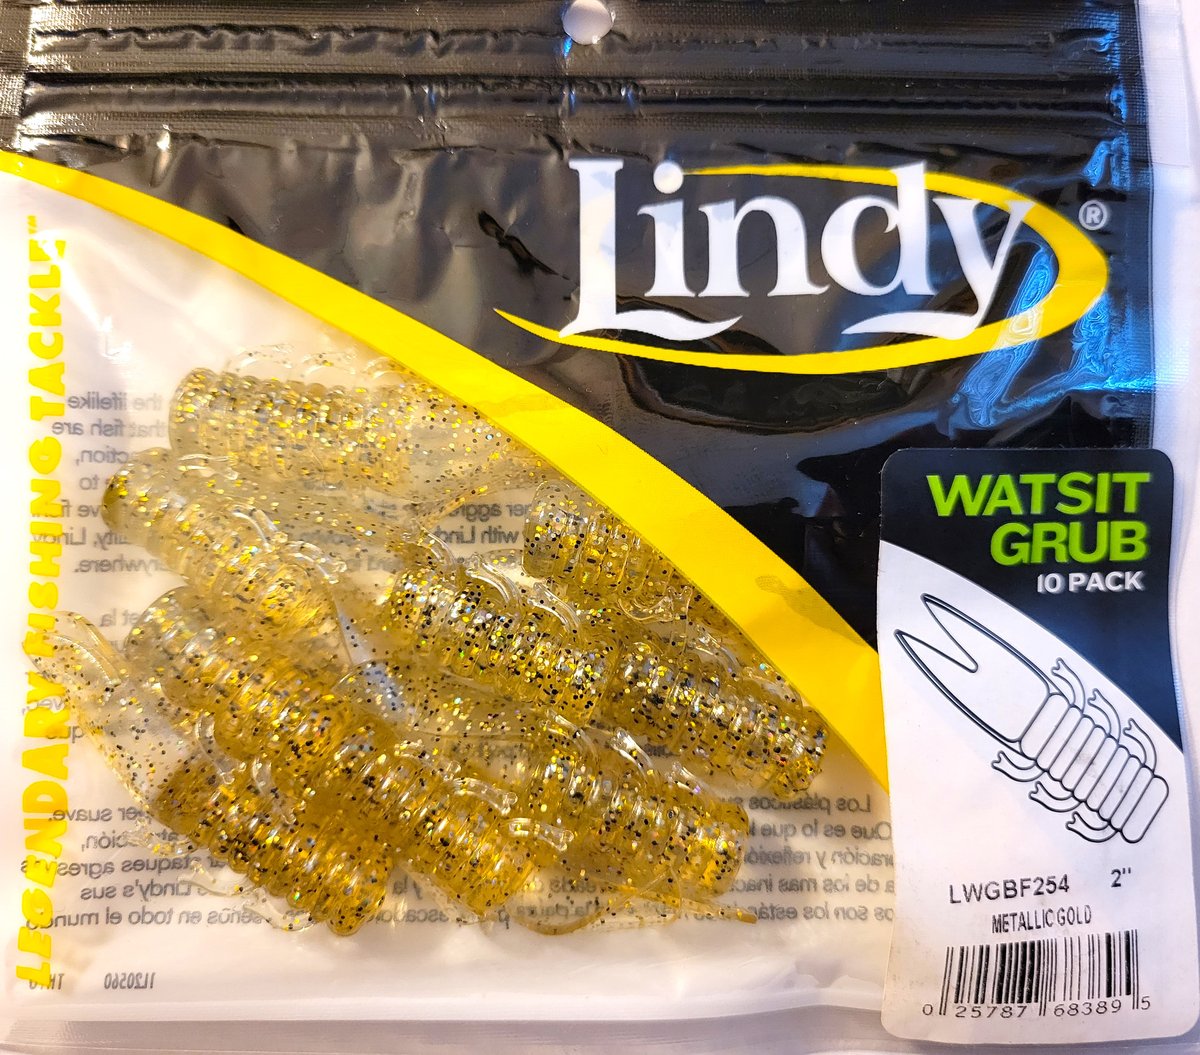  Lindy Watsit Grub Bodies, Orange Glitter, 1 1/4